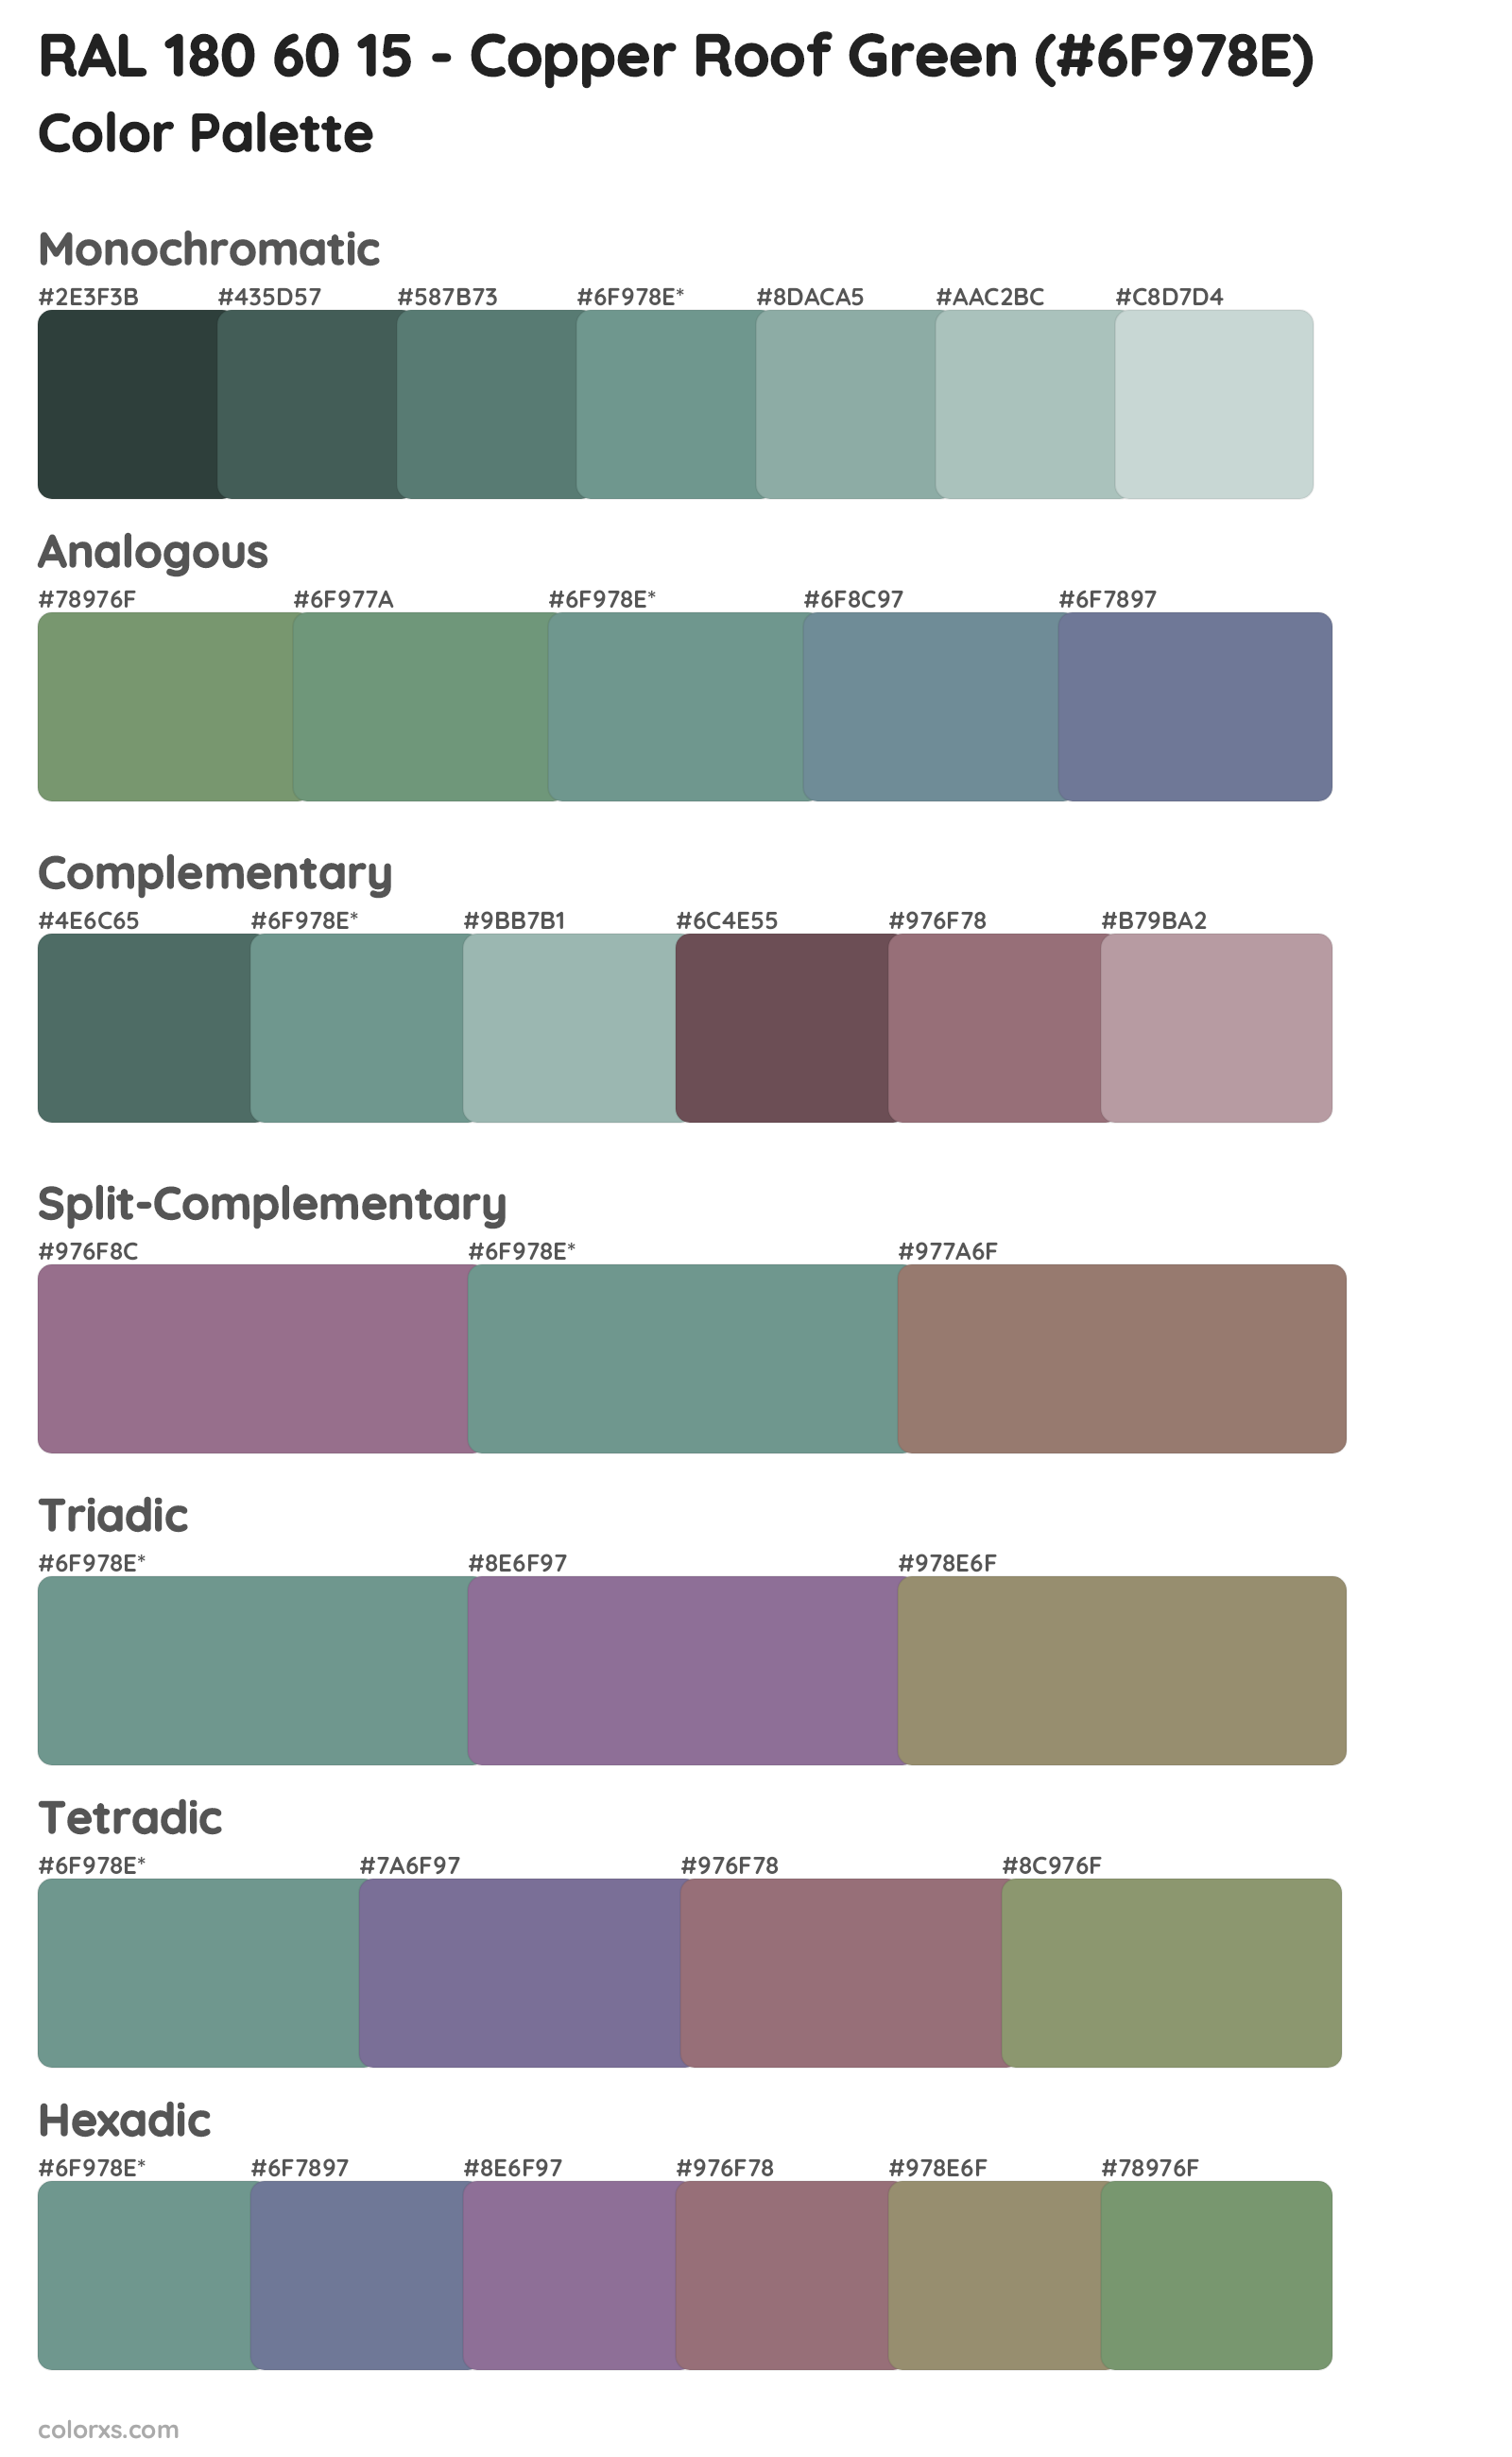 RAL 180 60 15 - Copper Roof Green Color Scheme Palettes